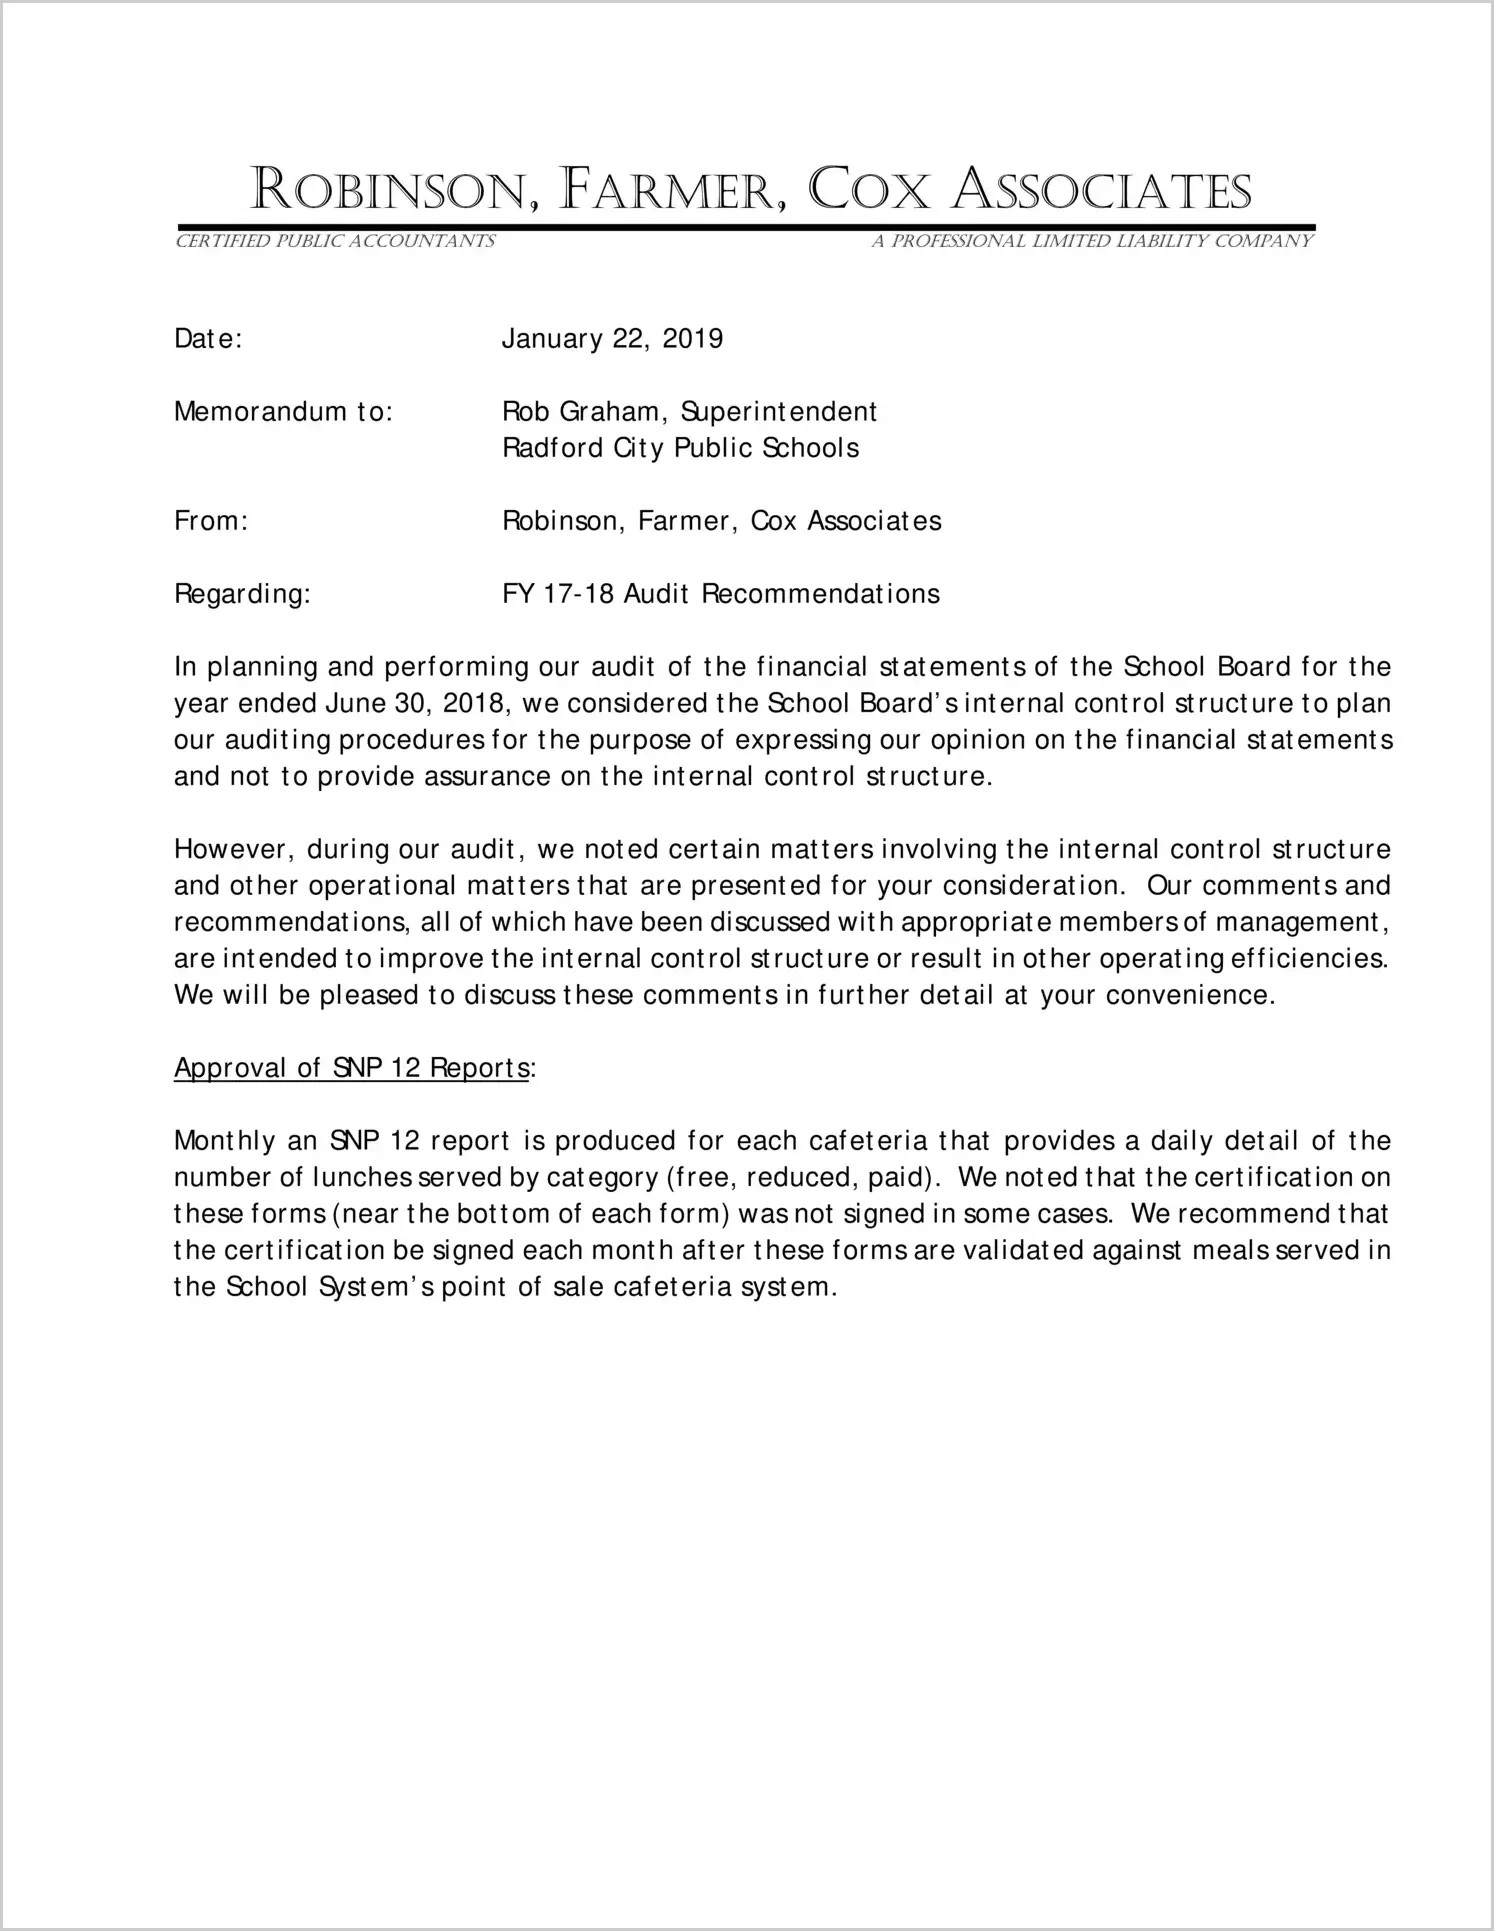 2018 Public Schools Management Letter for City of Radford